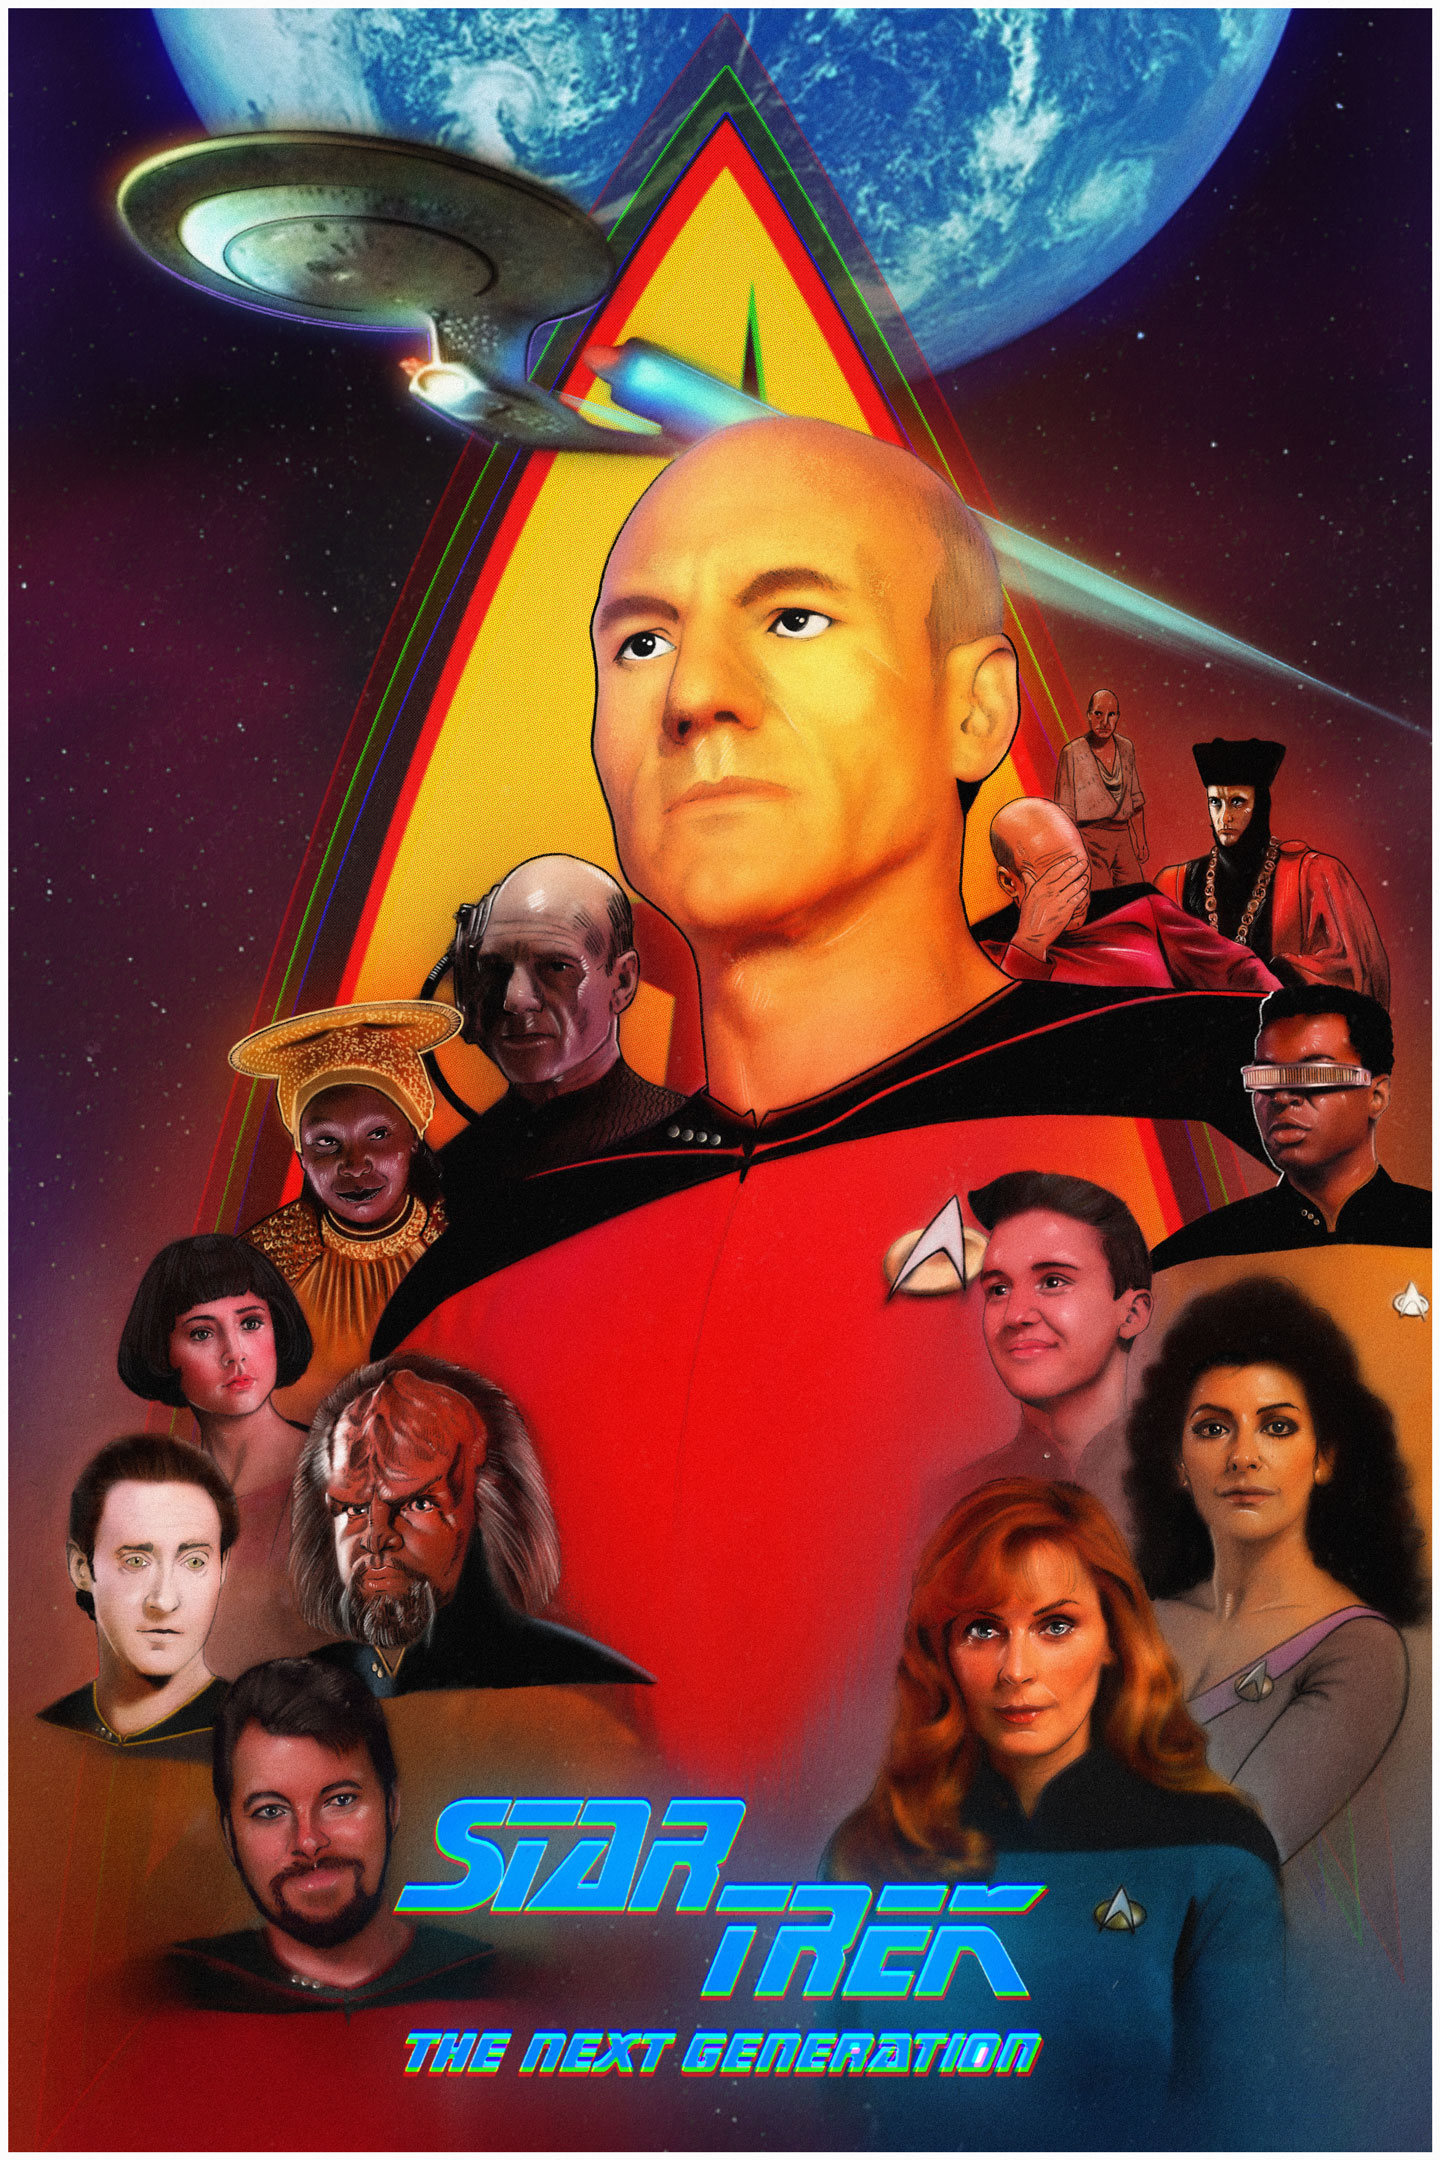 Star Trek : The Next Generation 35th anniversary poster.